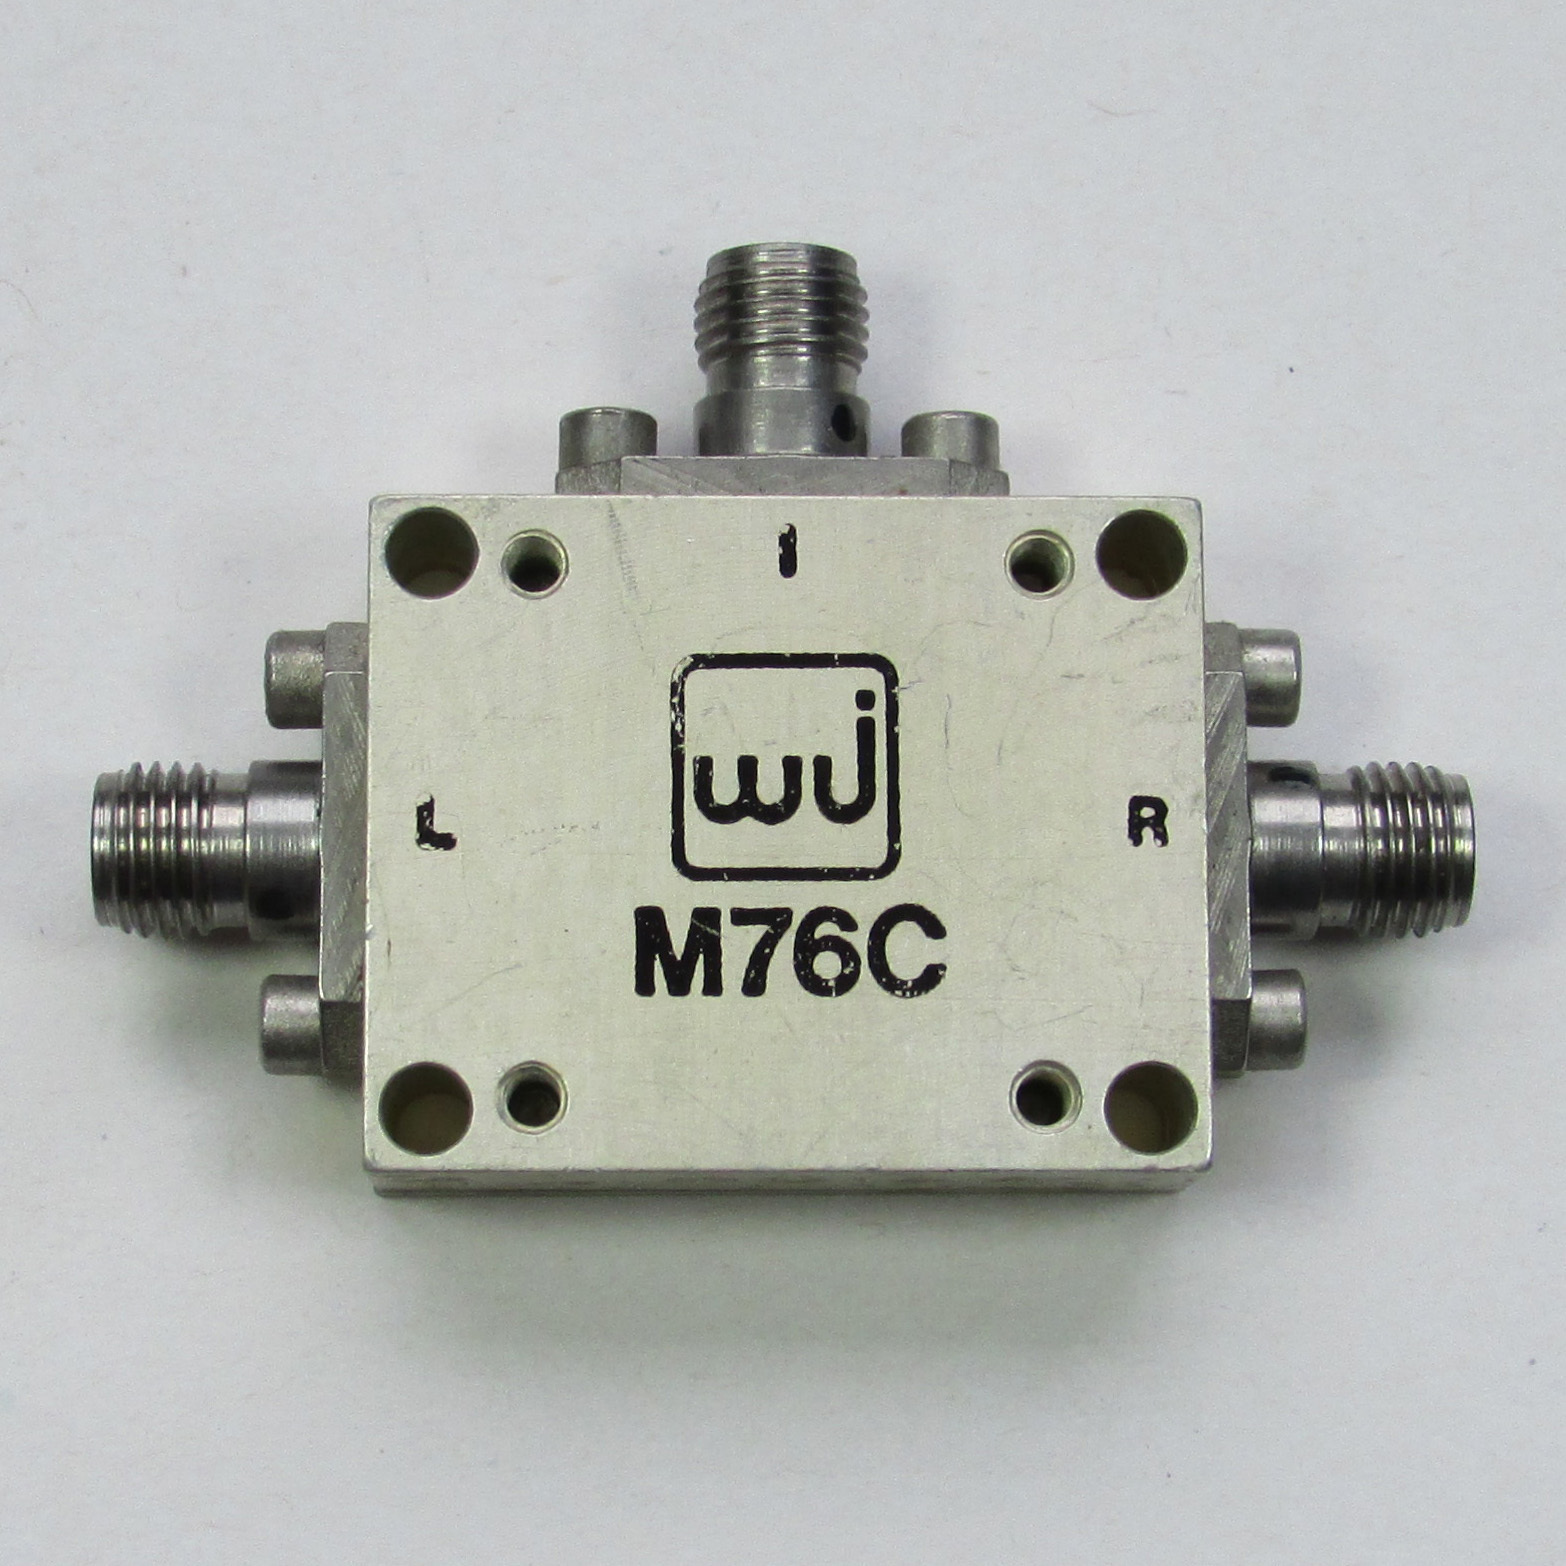 American MACOM M76C 2.5-11.5GHz SMA RF Microwave Coaxial Double Balanced Mixer